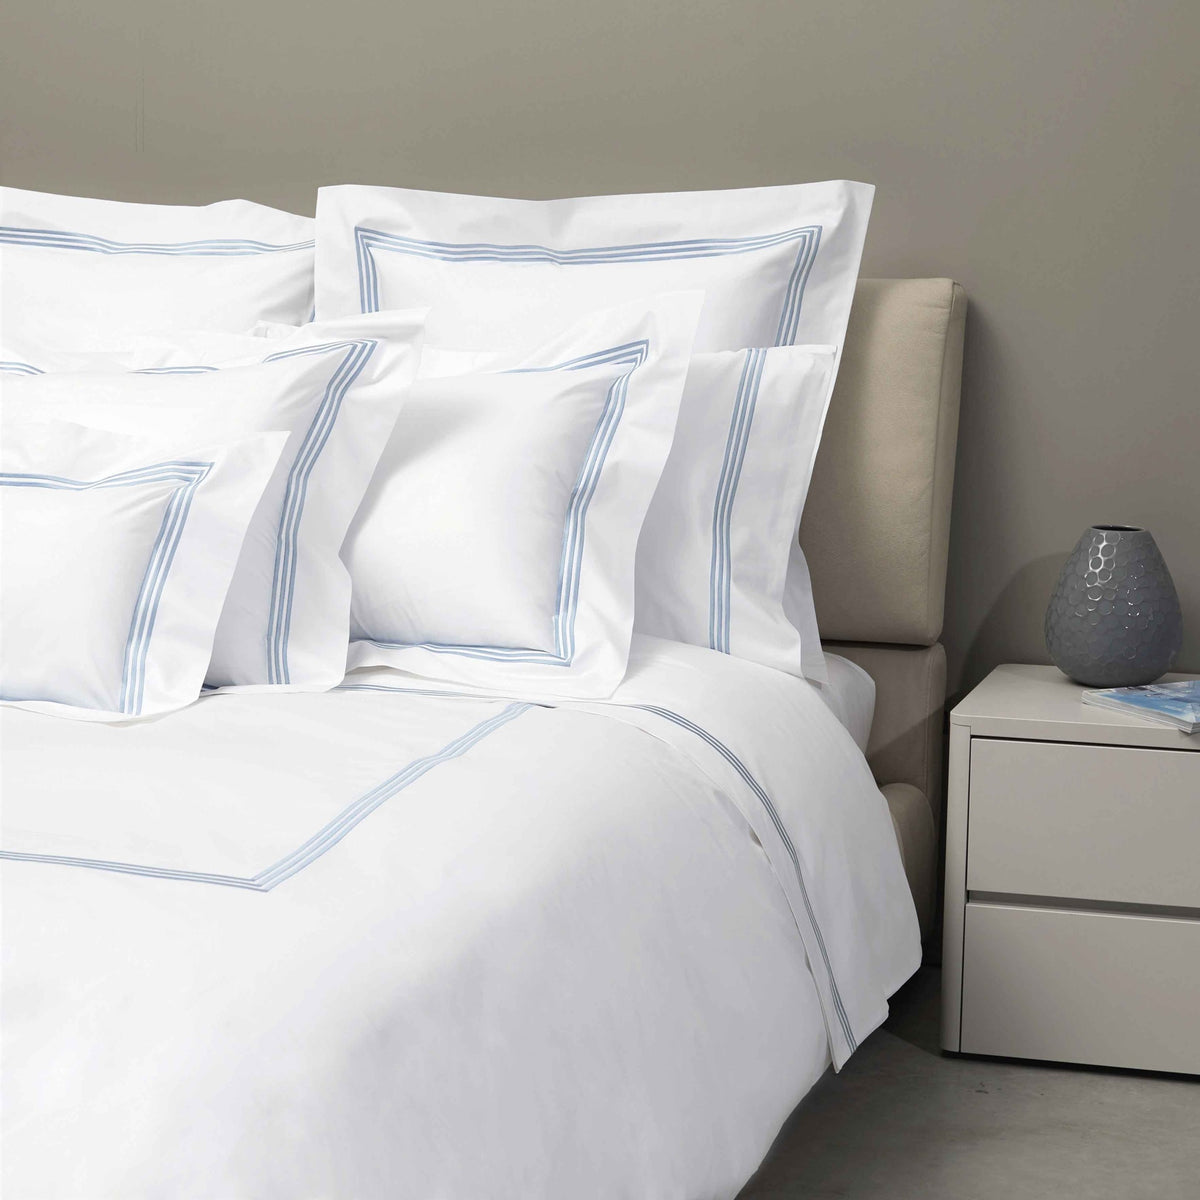 Bed Dressed in Signoria Platinum Percale Bedding in White/Sky Blue Color